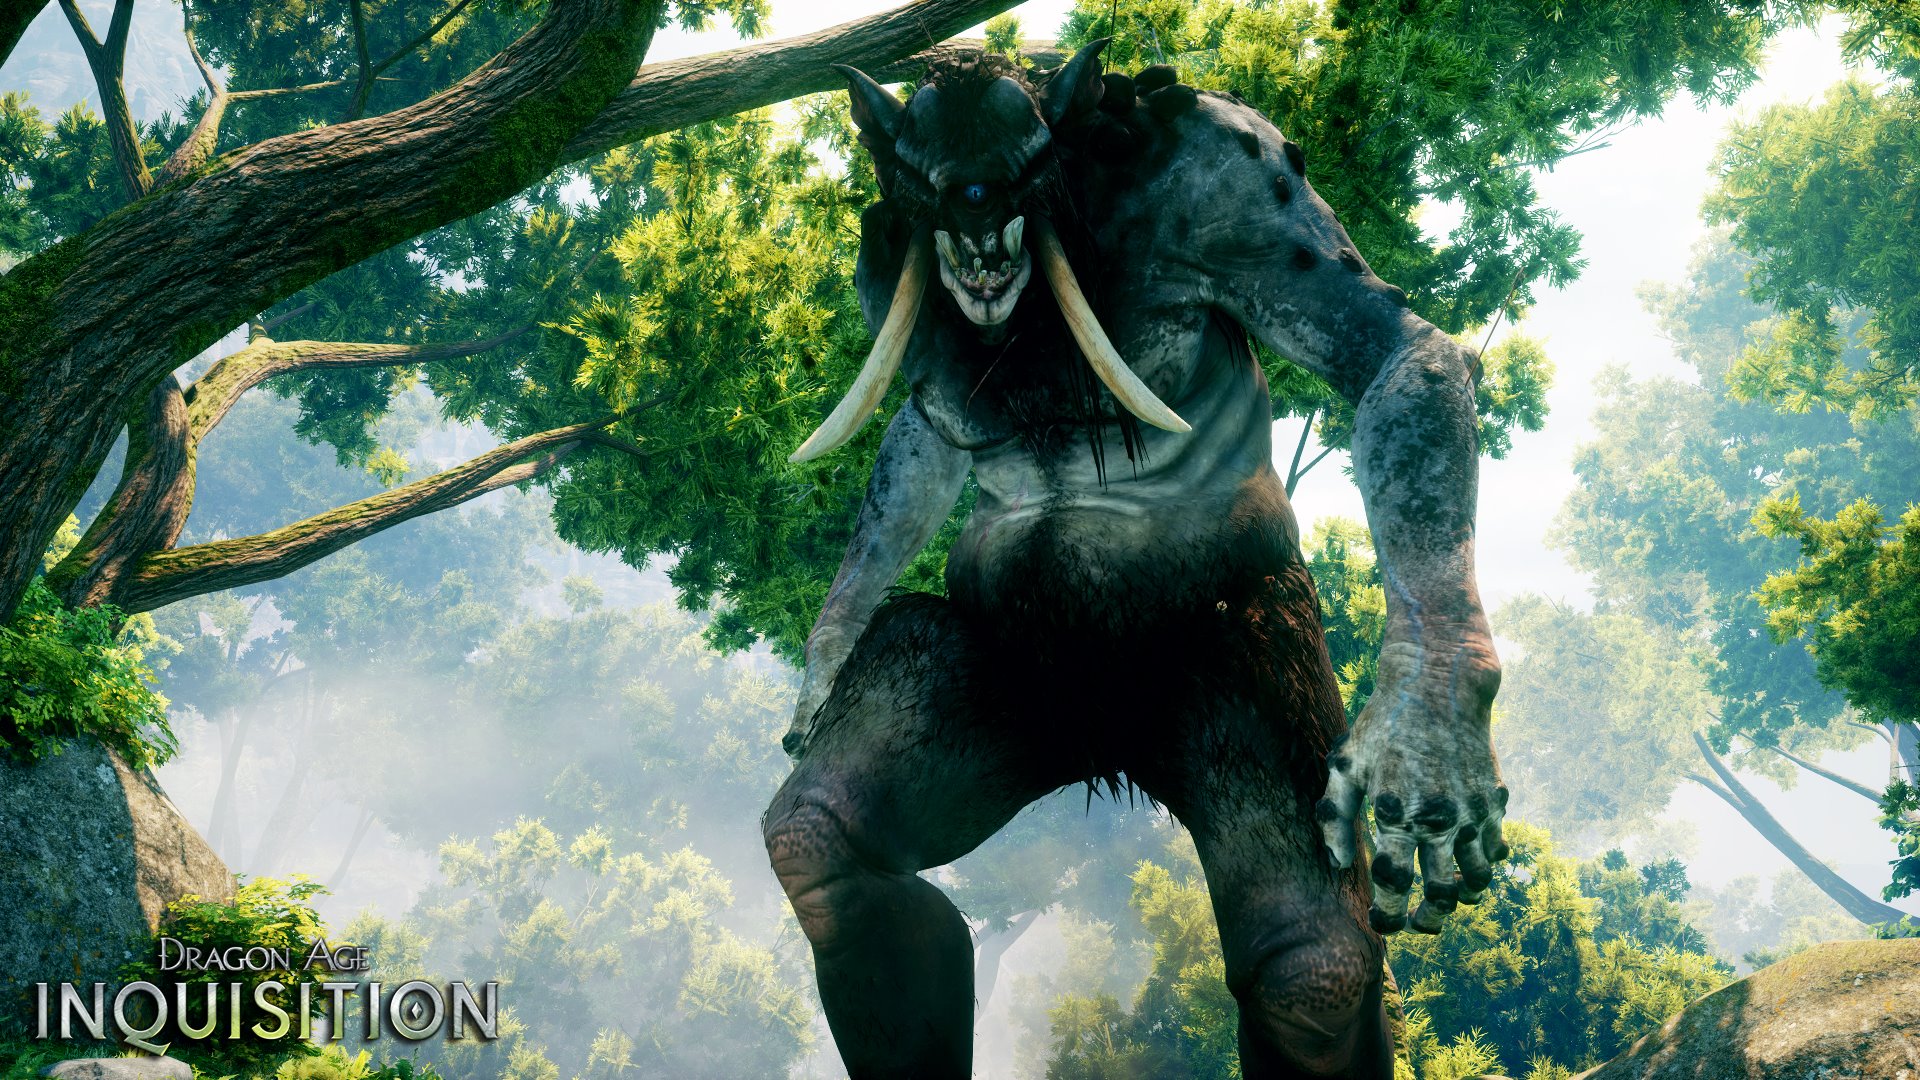 Dragon Age Inquisition gets stunning new screenshots 